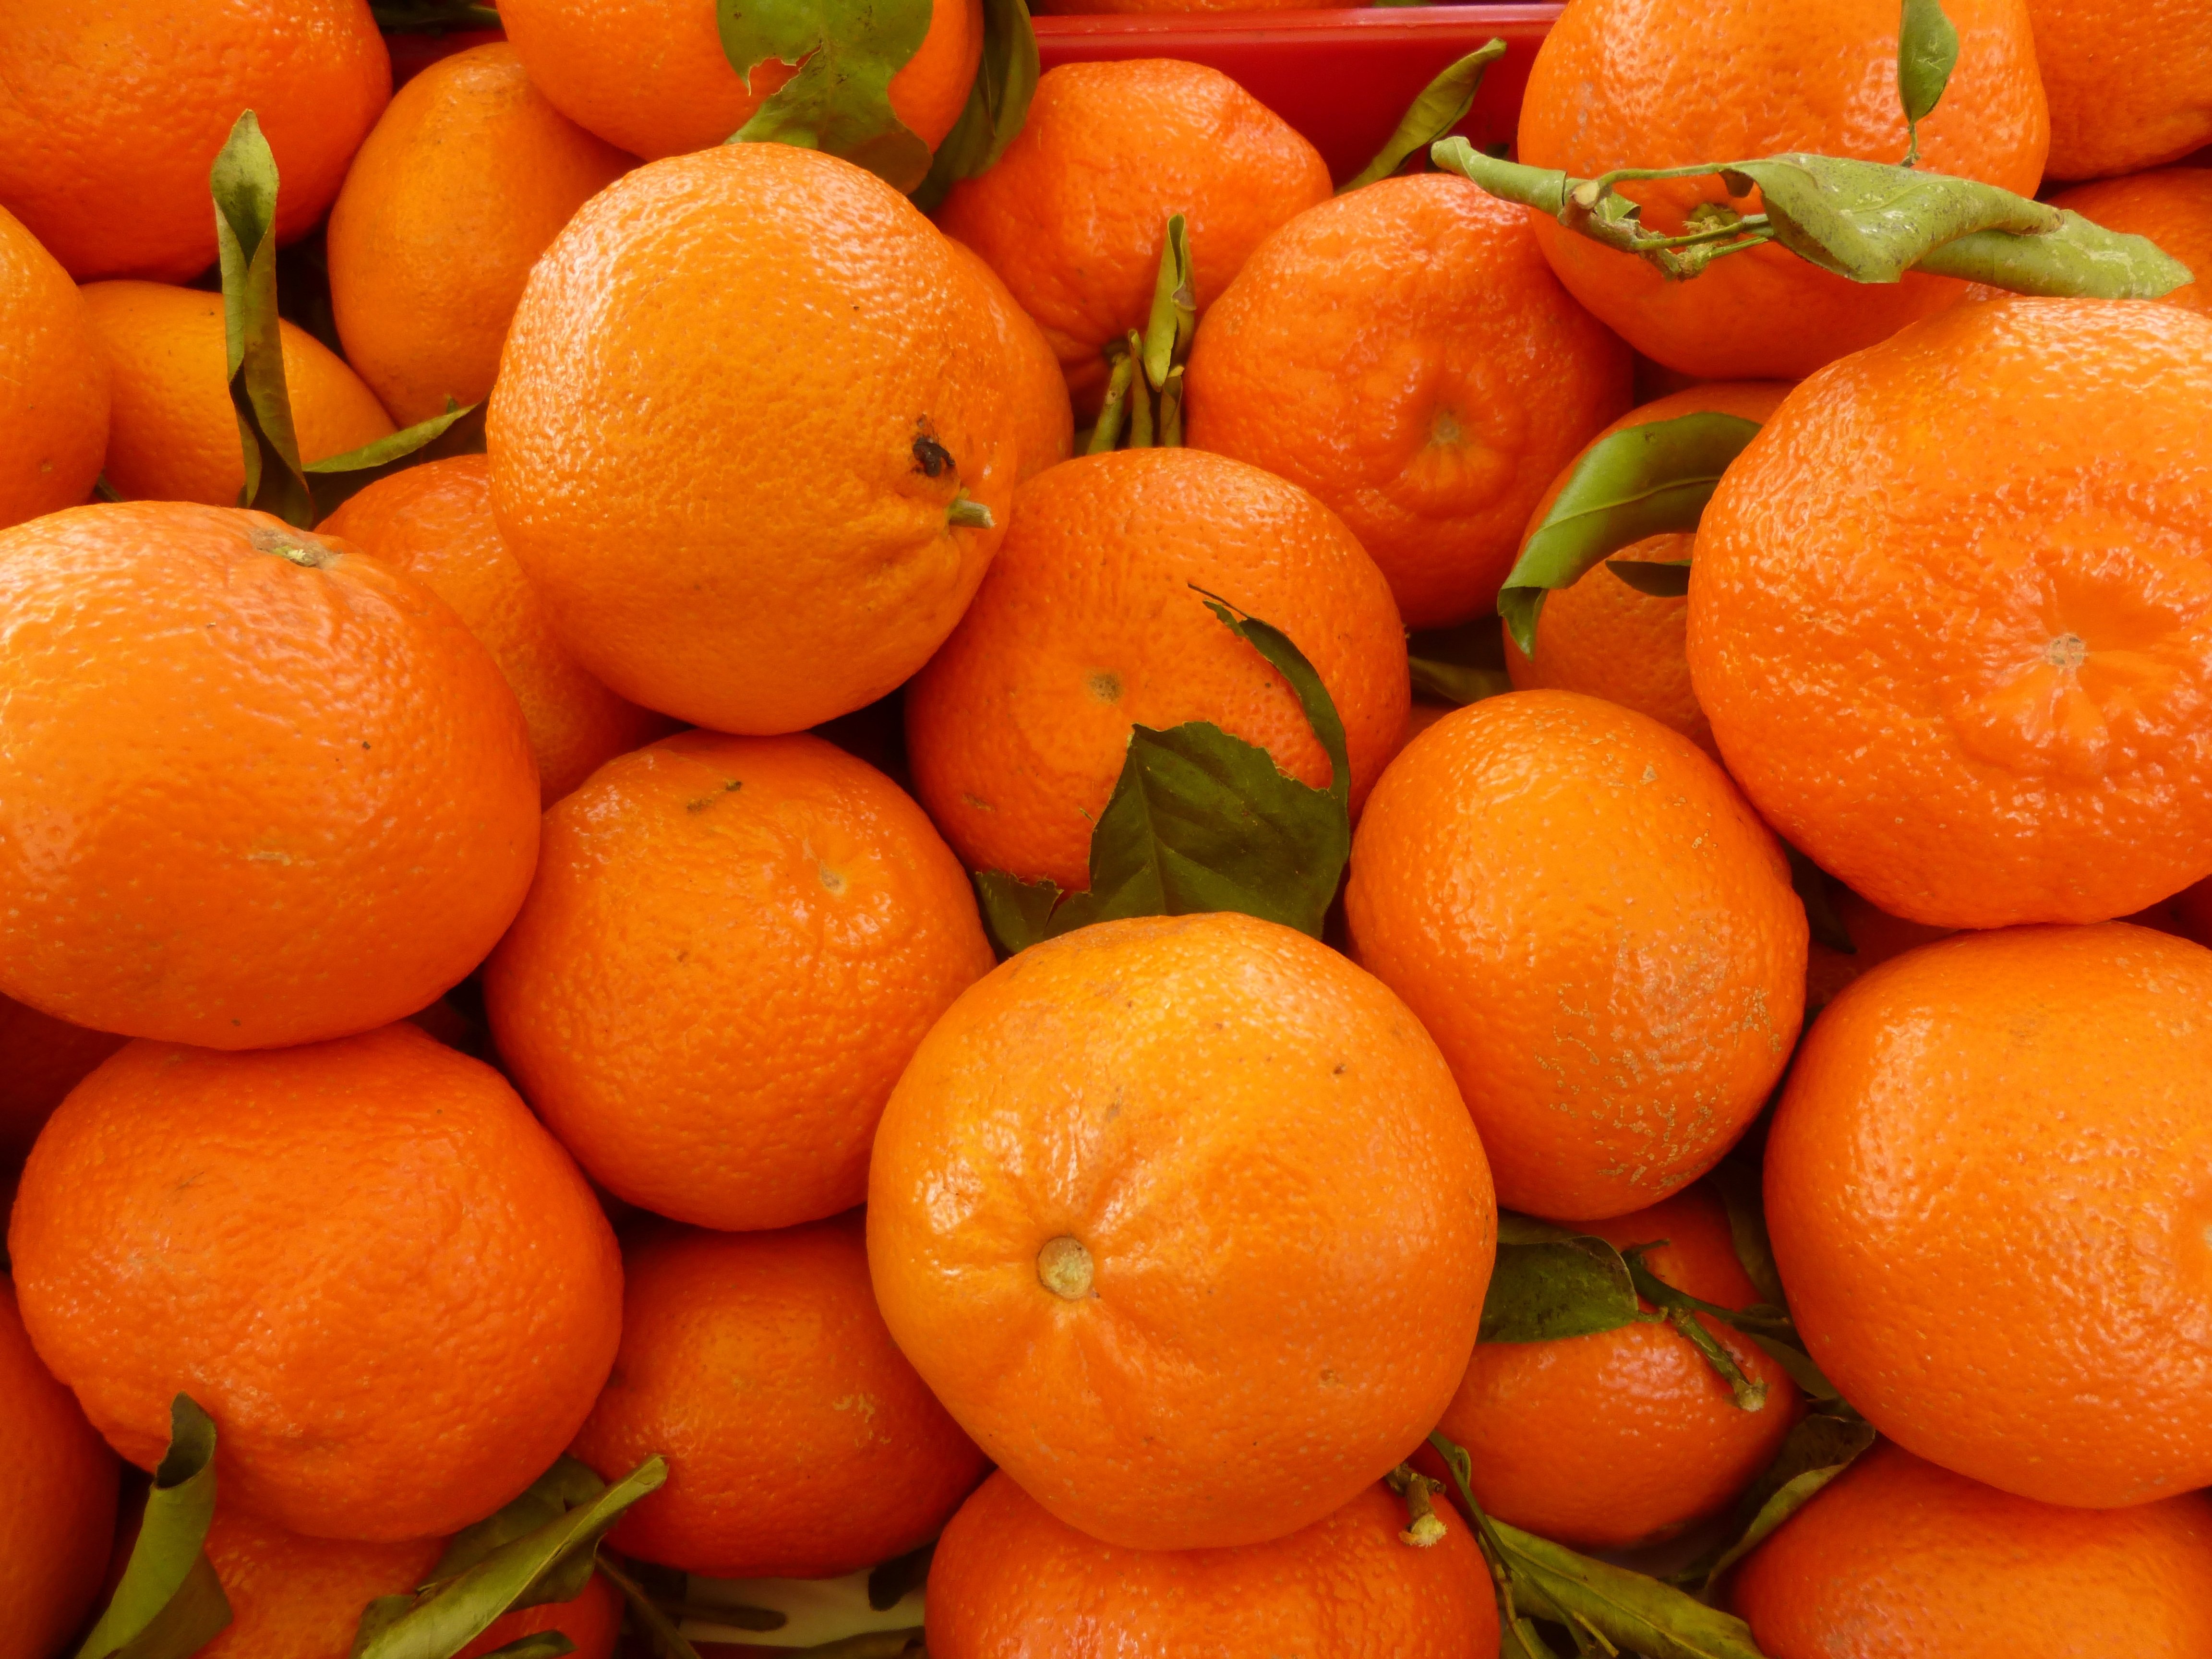 Среди мандаринов. Танжерин фрукт. Мандарины Jaffa. Оранжевый мандарин. Плод мандарина.